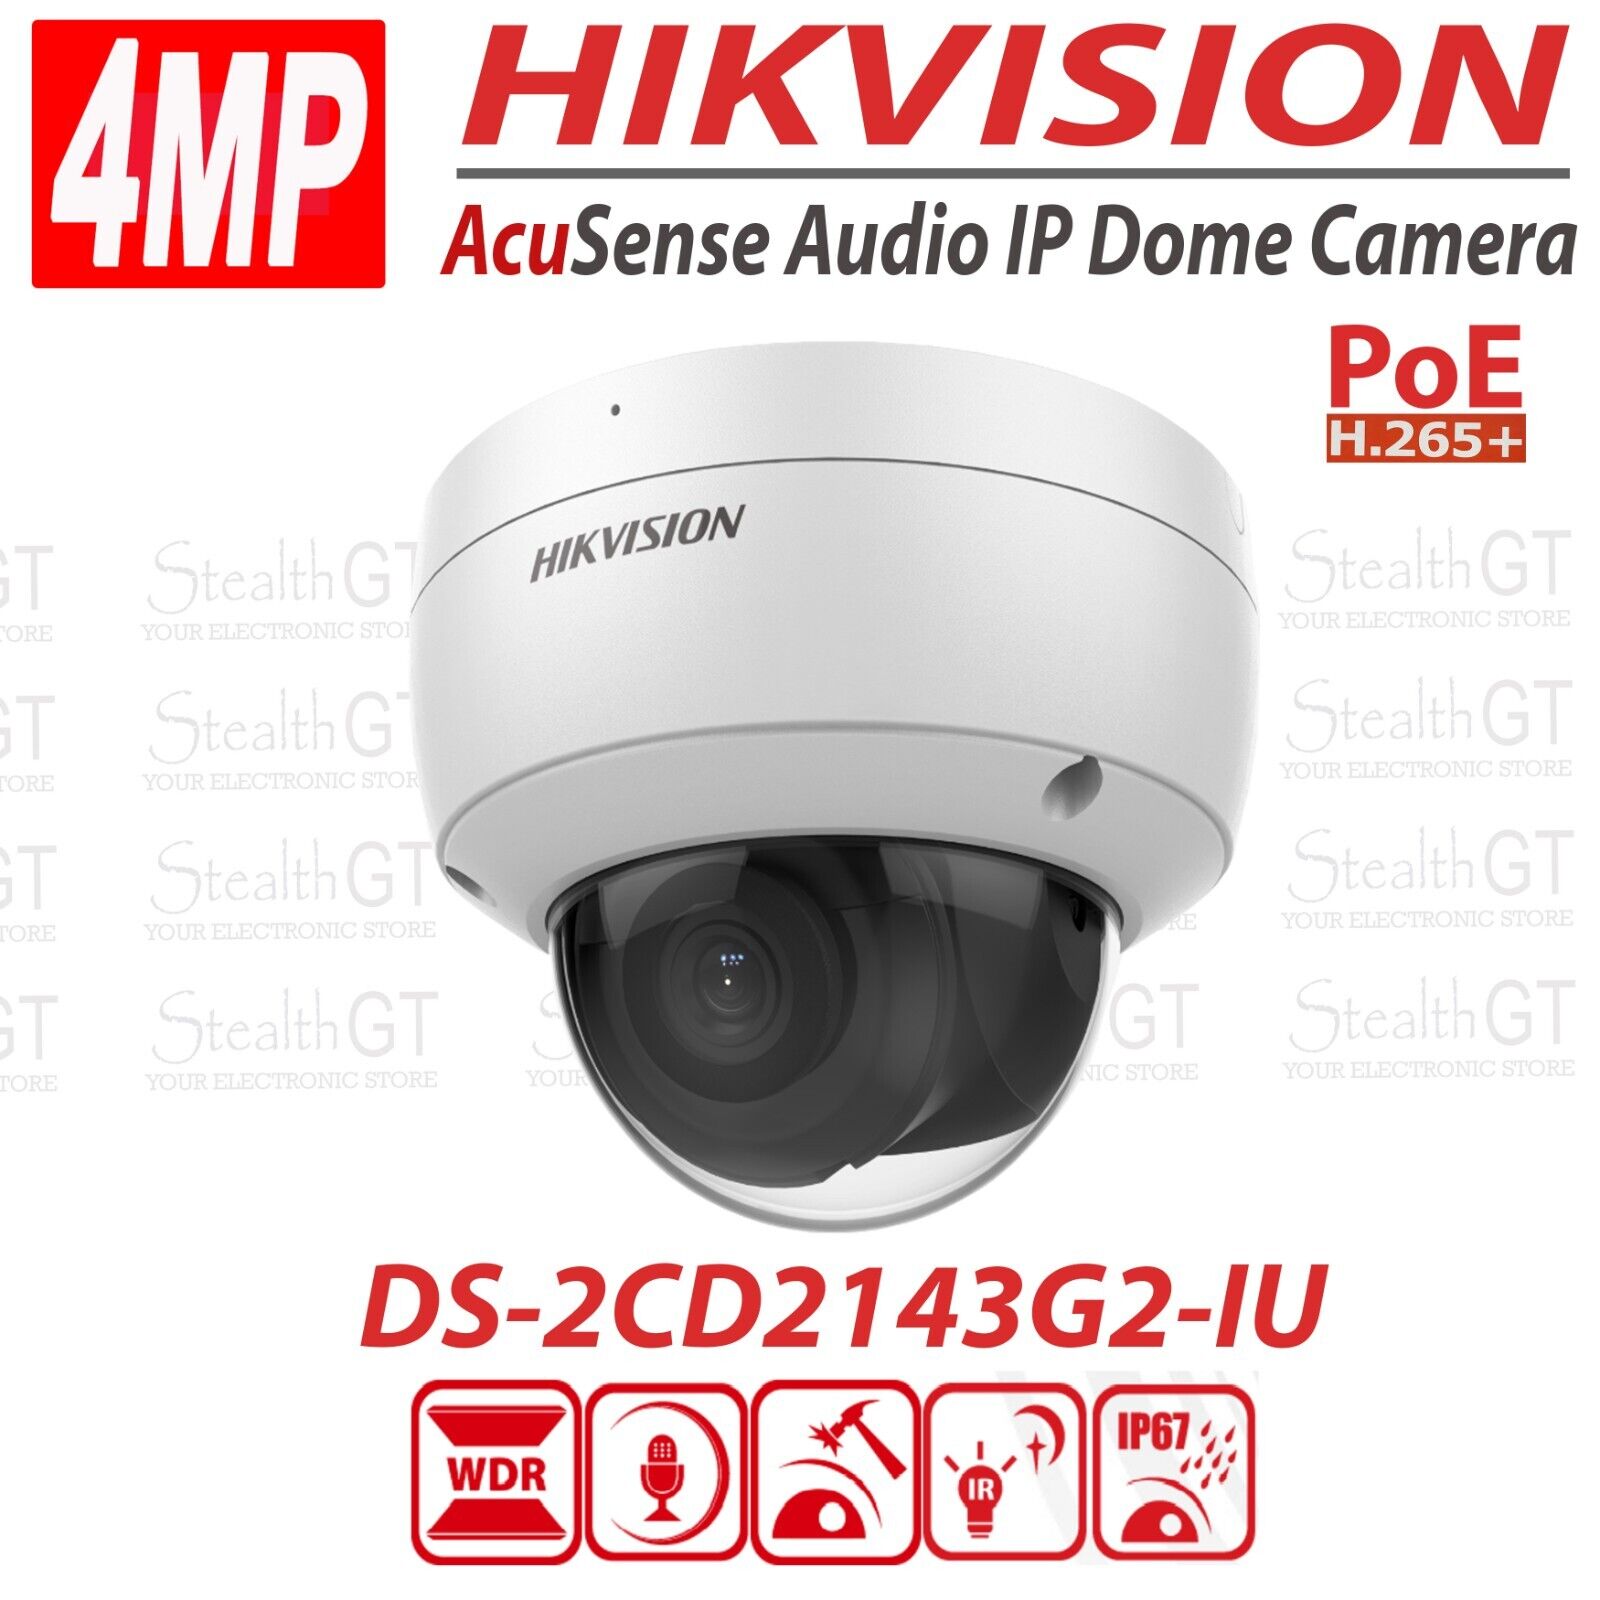 Hikvision AcuSense DS-2CD2143G2-IU 4MP Audio Netword Dome Camera PoE H.265+